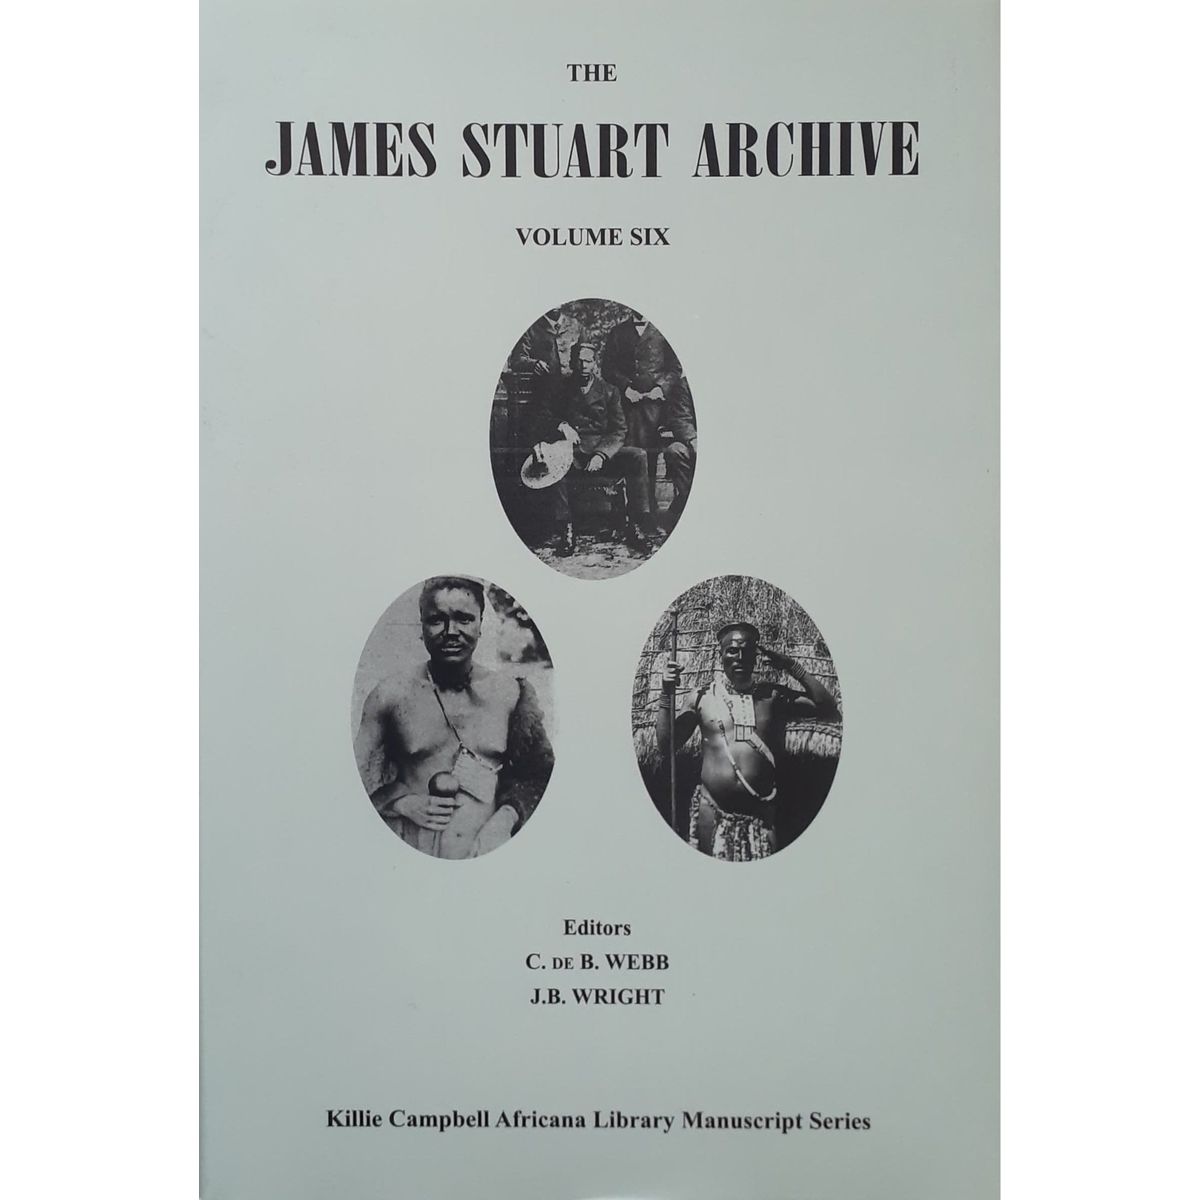 ISBN: 9781869142643 / 1869142640 - The James Stuart Archive: Volume 6 by C. De B. Webb and J.B. Wright [2014]